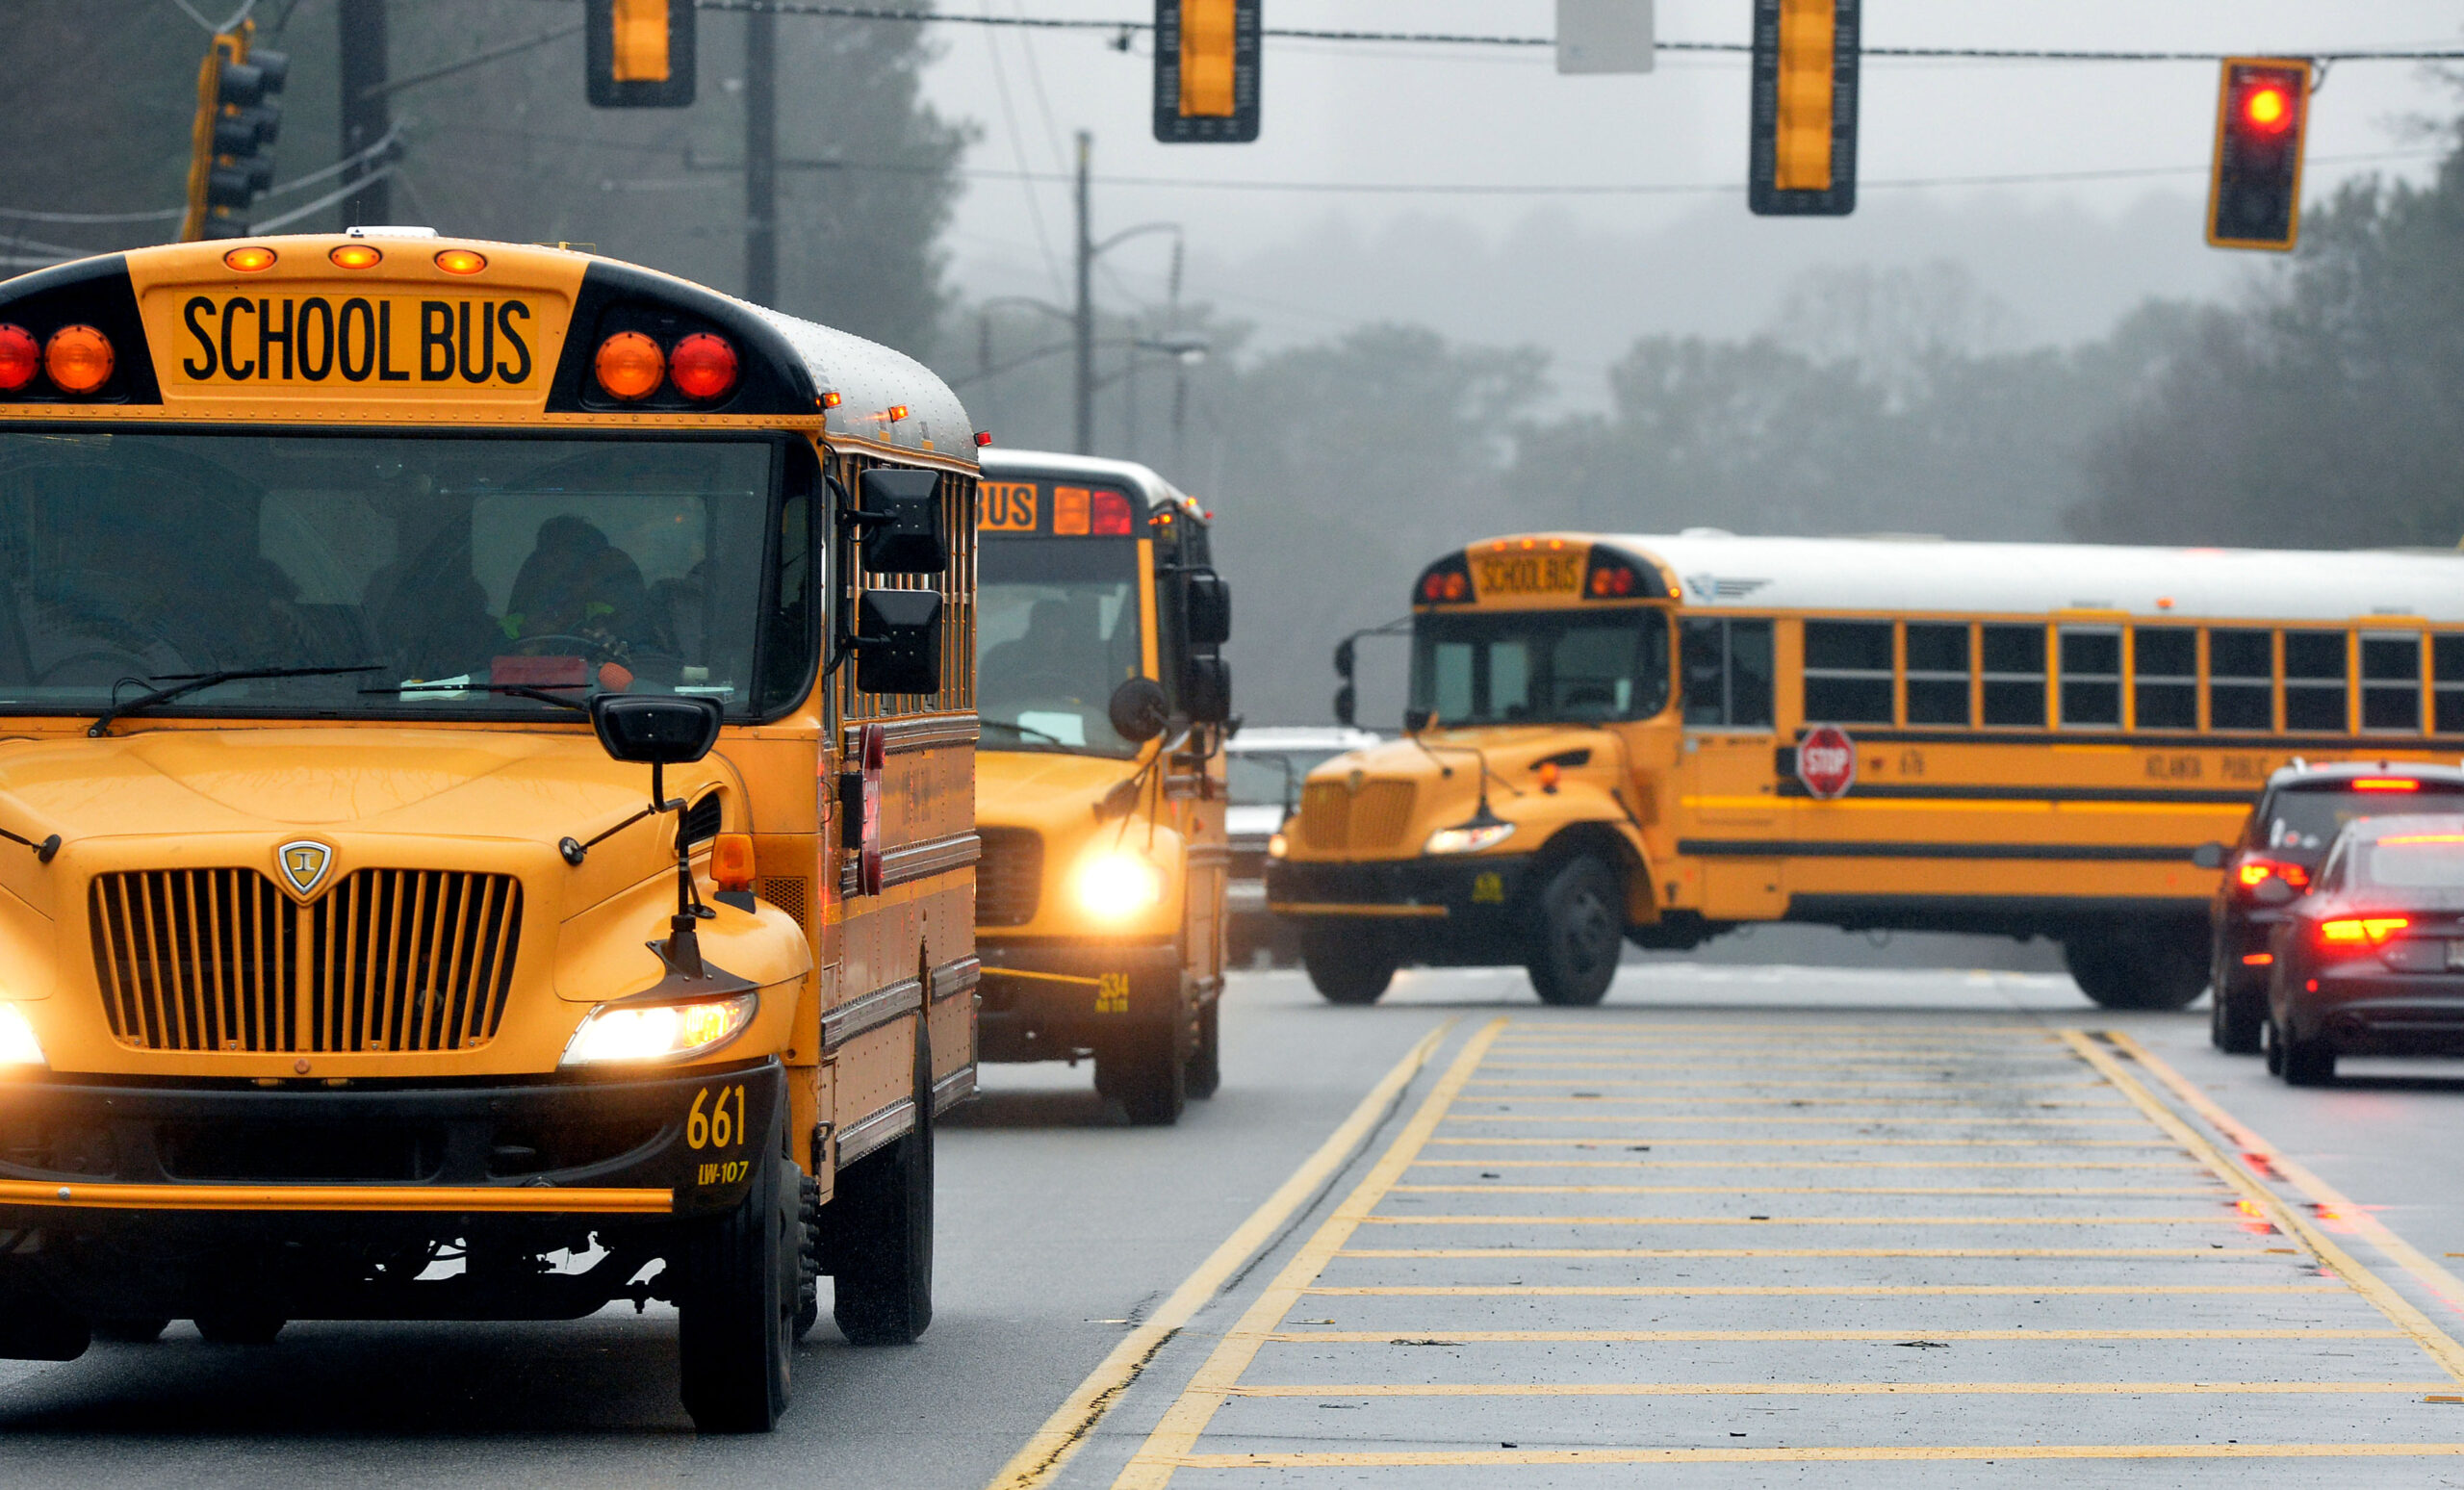 Line of school buses